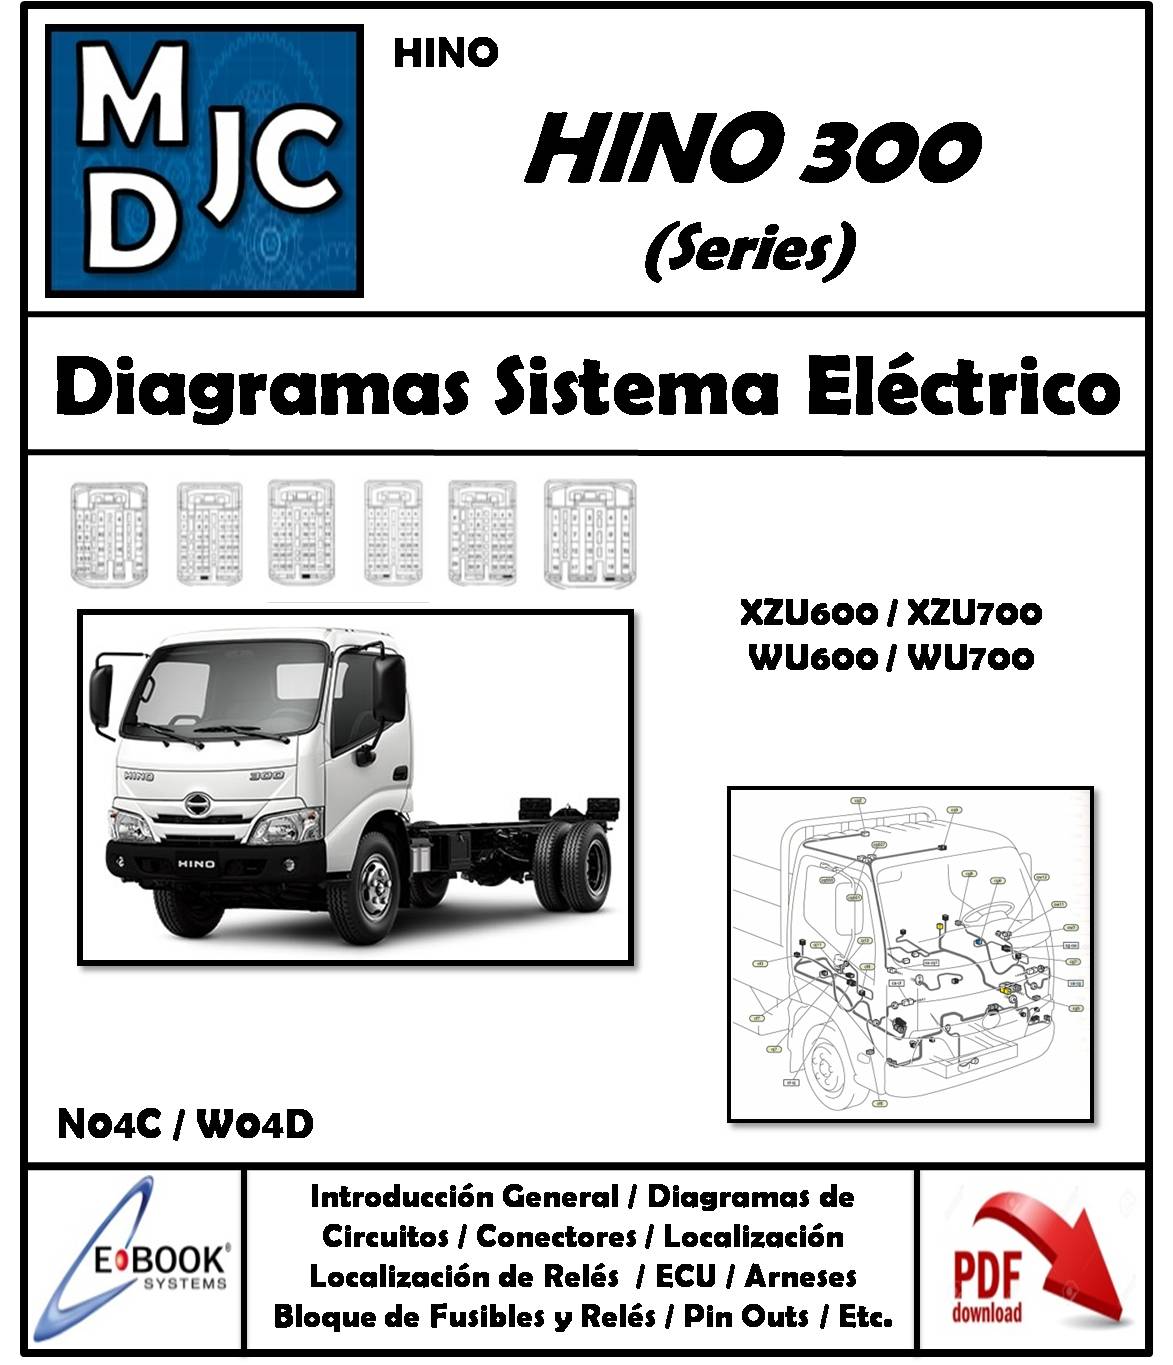 Manual Diagramas Sistema Electrico Hino 300 XZU600 / XZU700 /WU600 / WU700